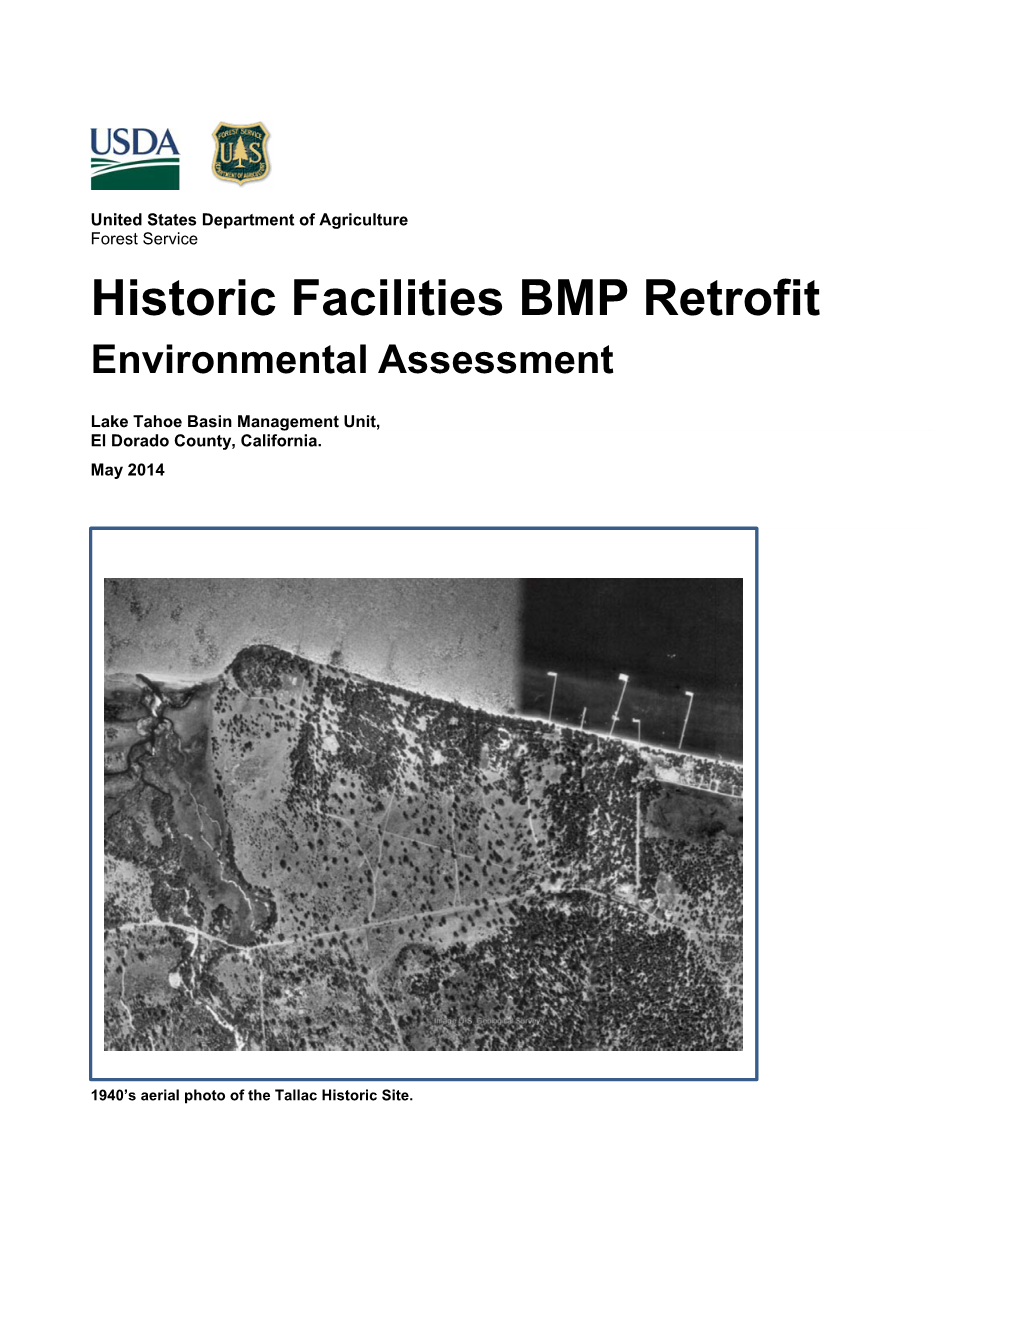 Historic Facilities BMP Retrofit Environmental Assessment